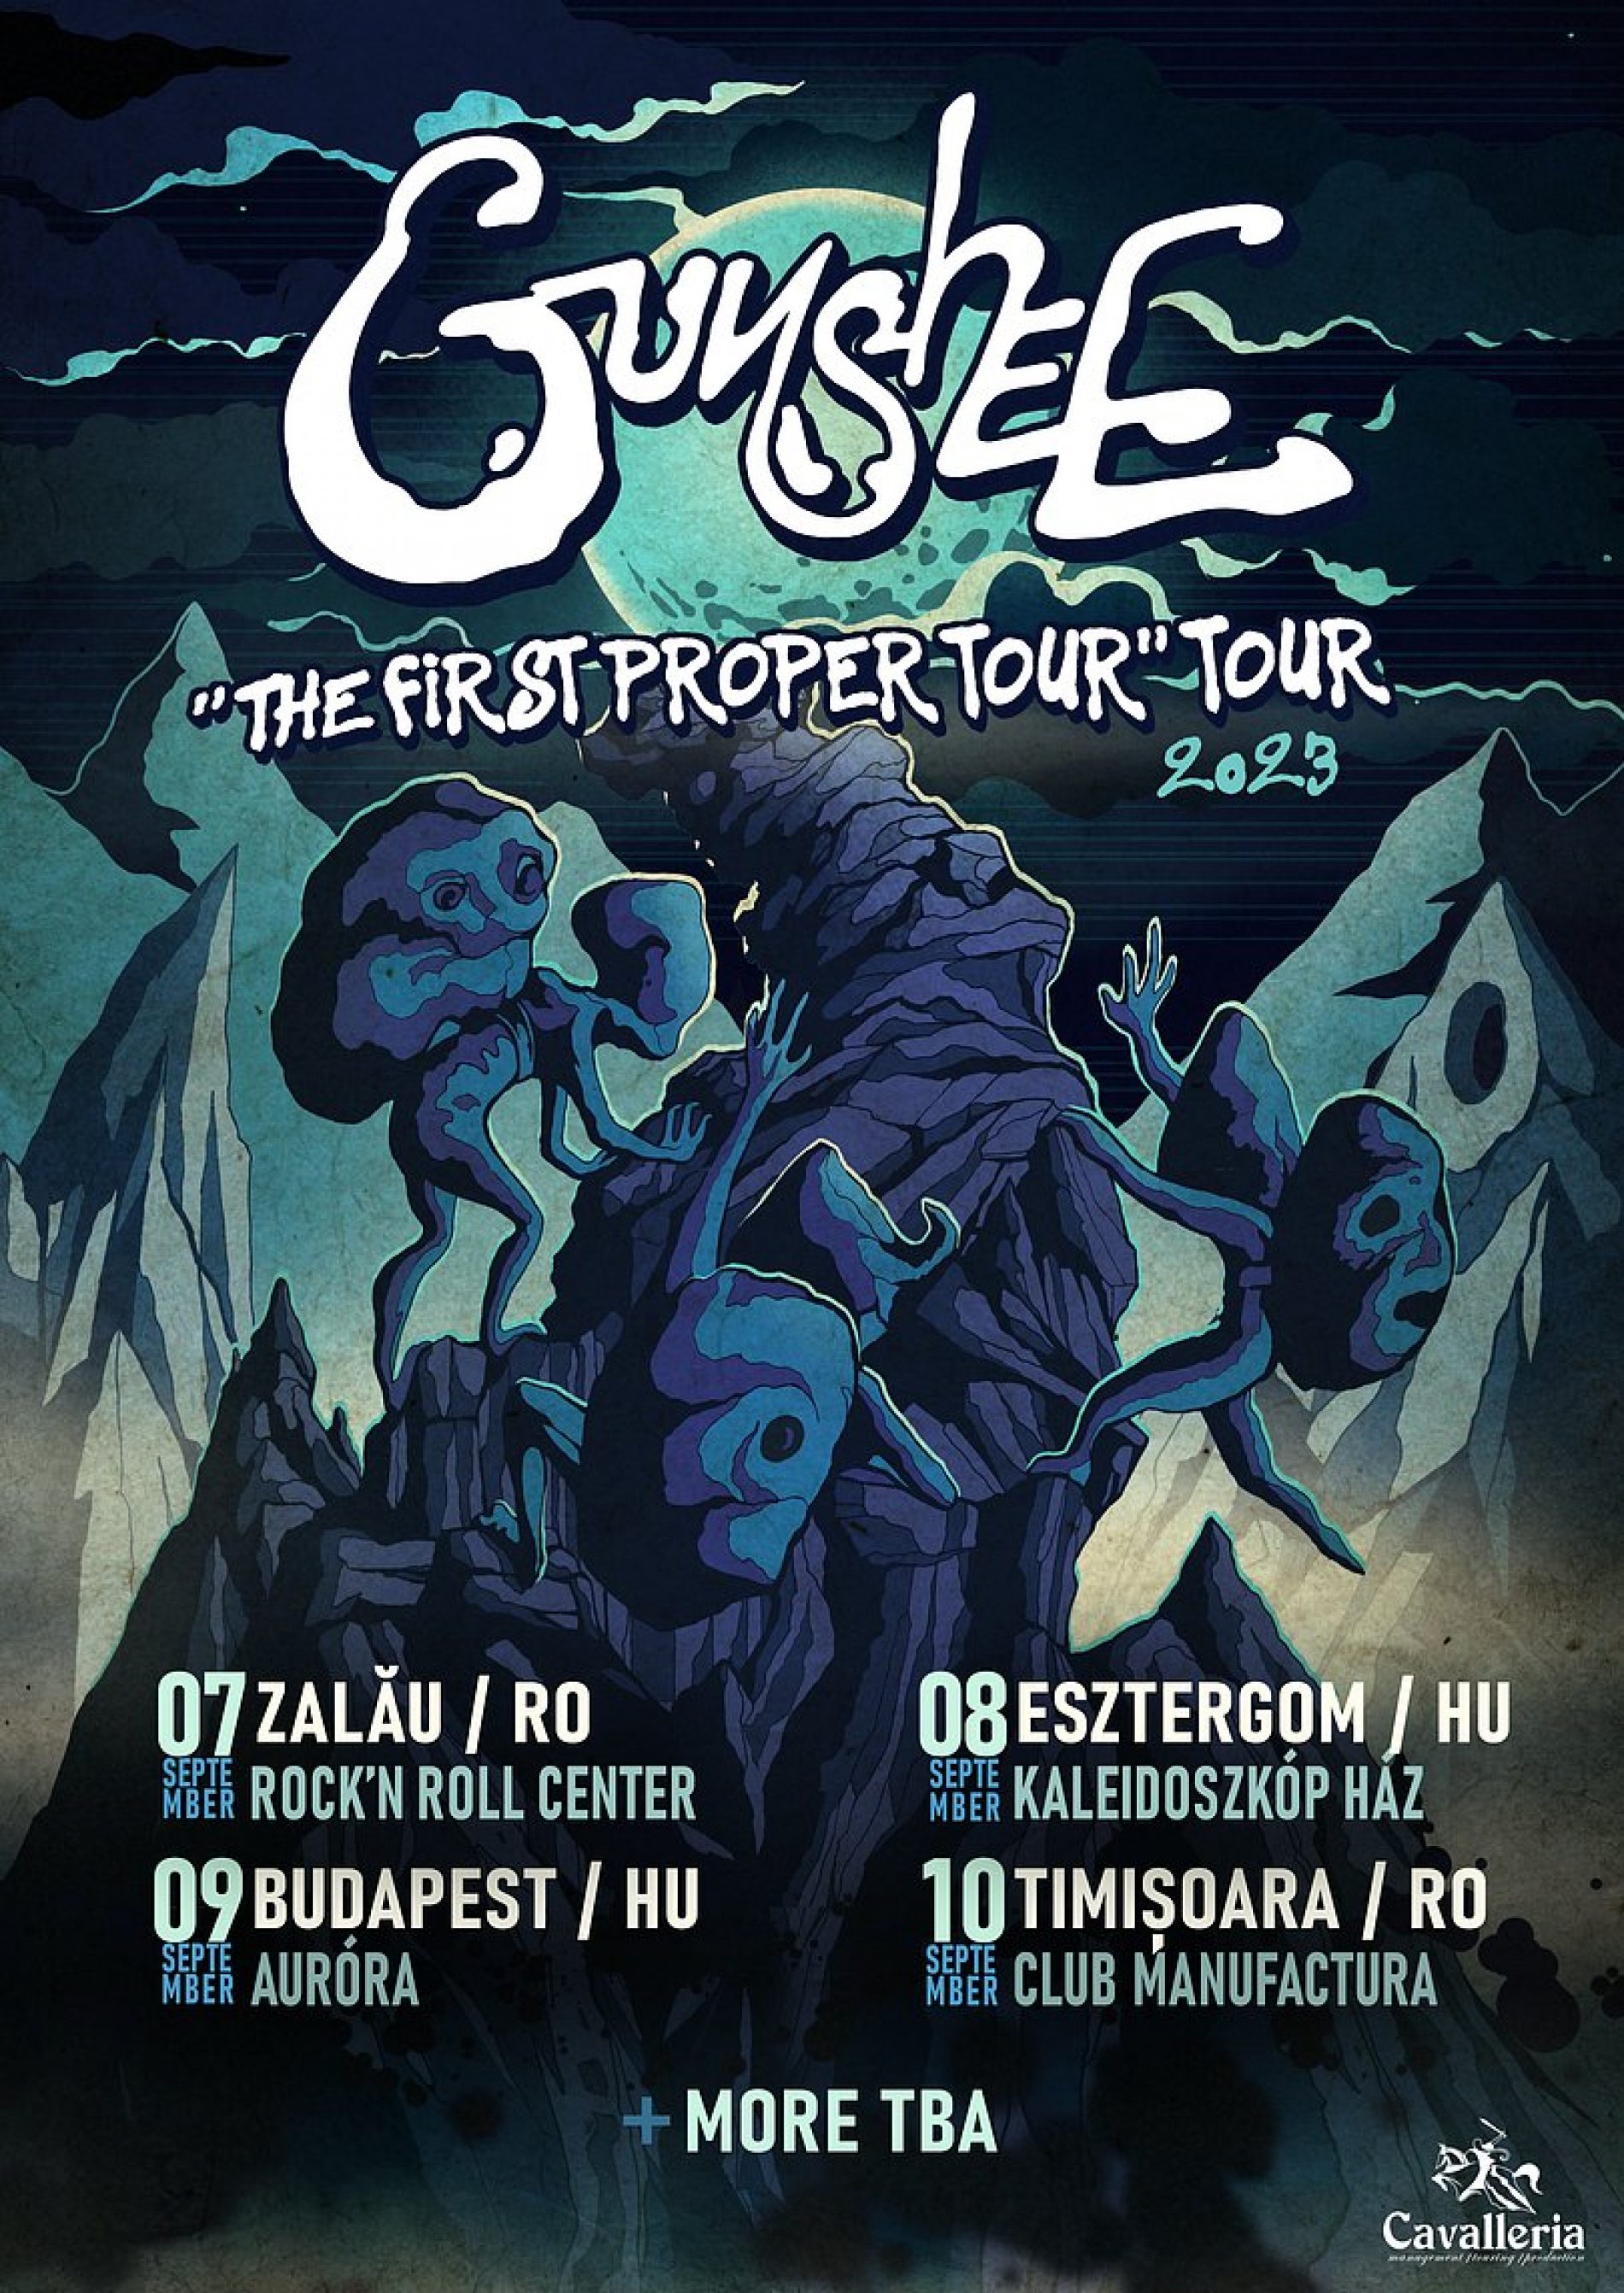 Gunshee anunță „The First Proper Tour” Tour în septembrie